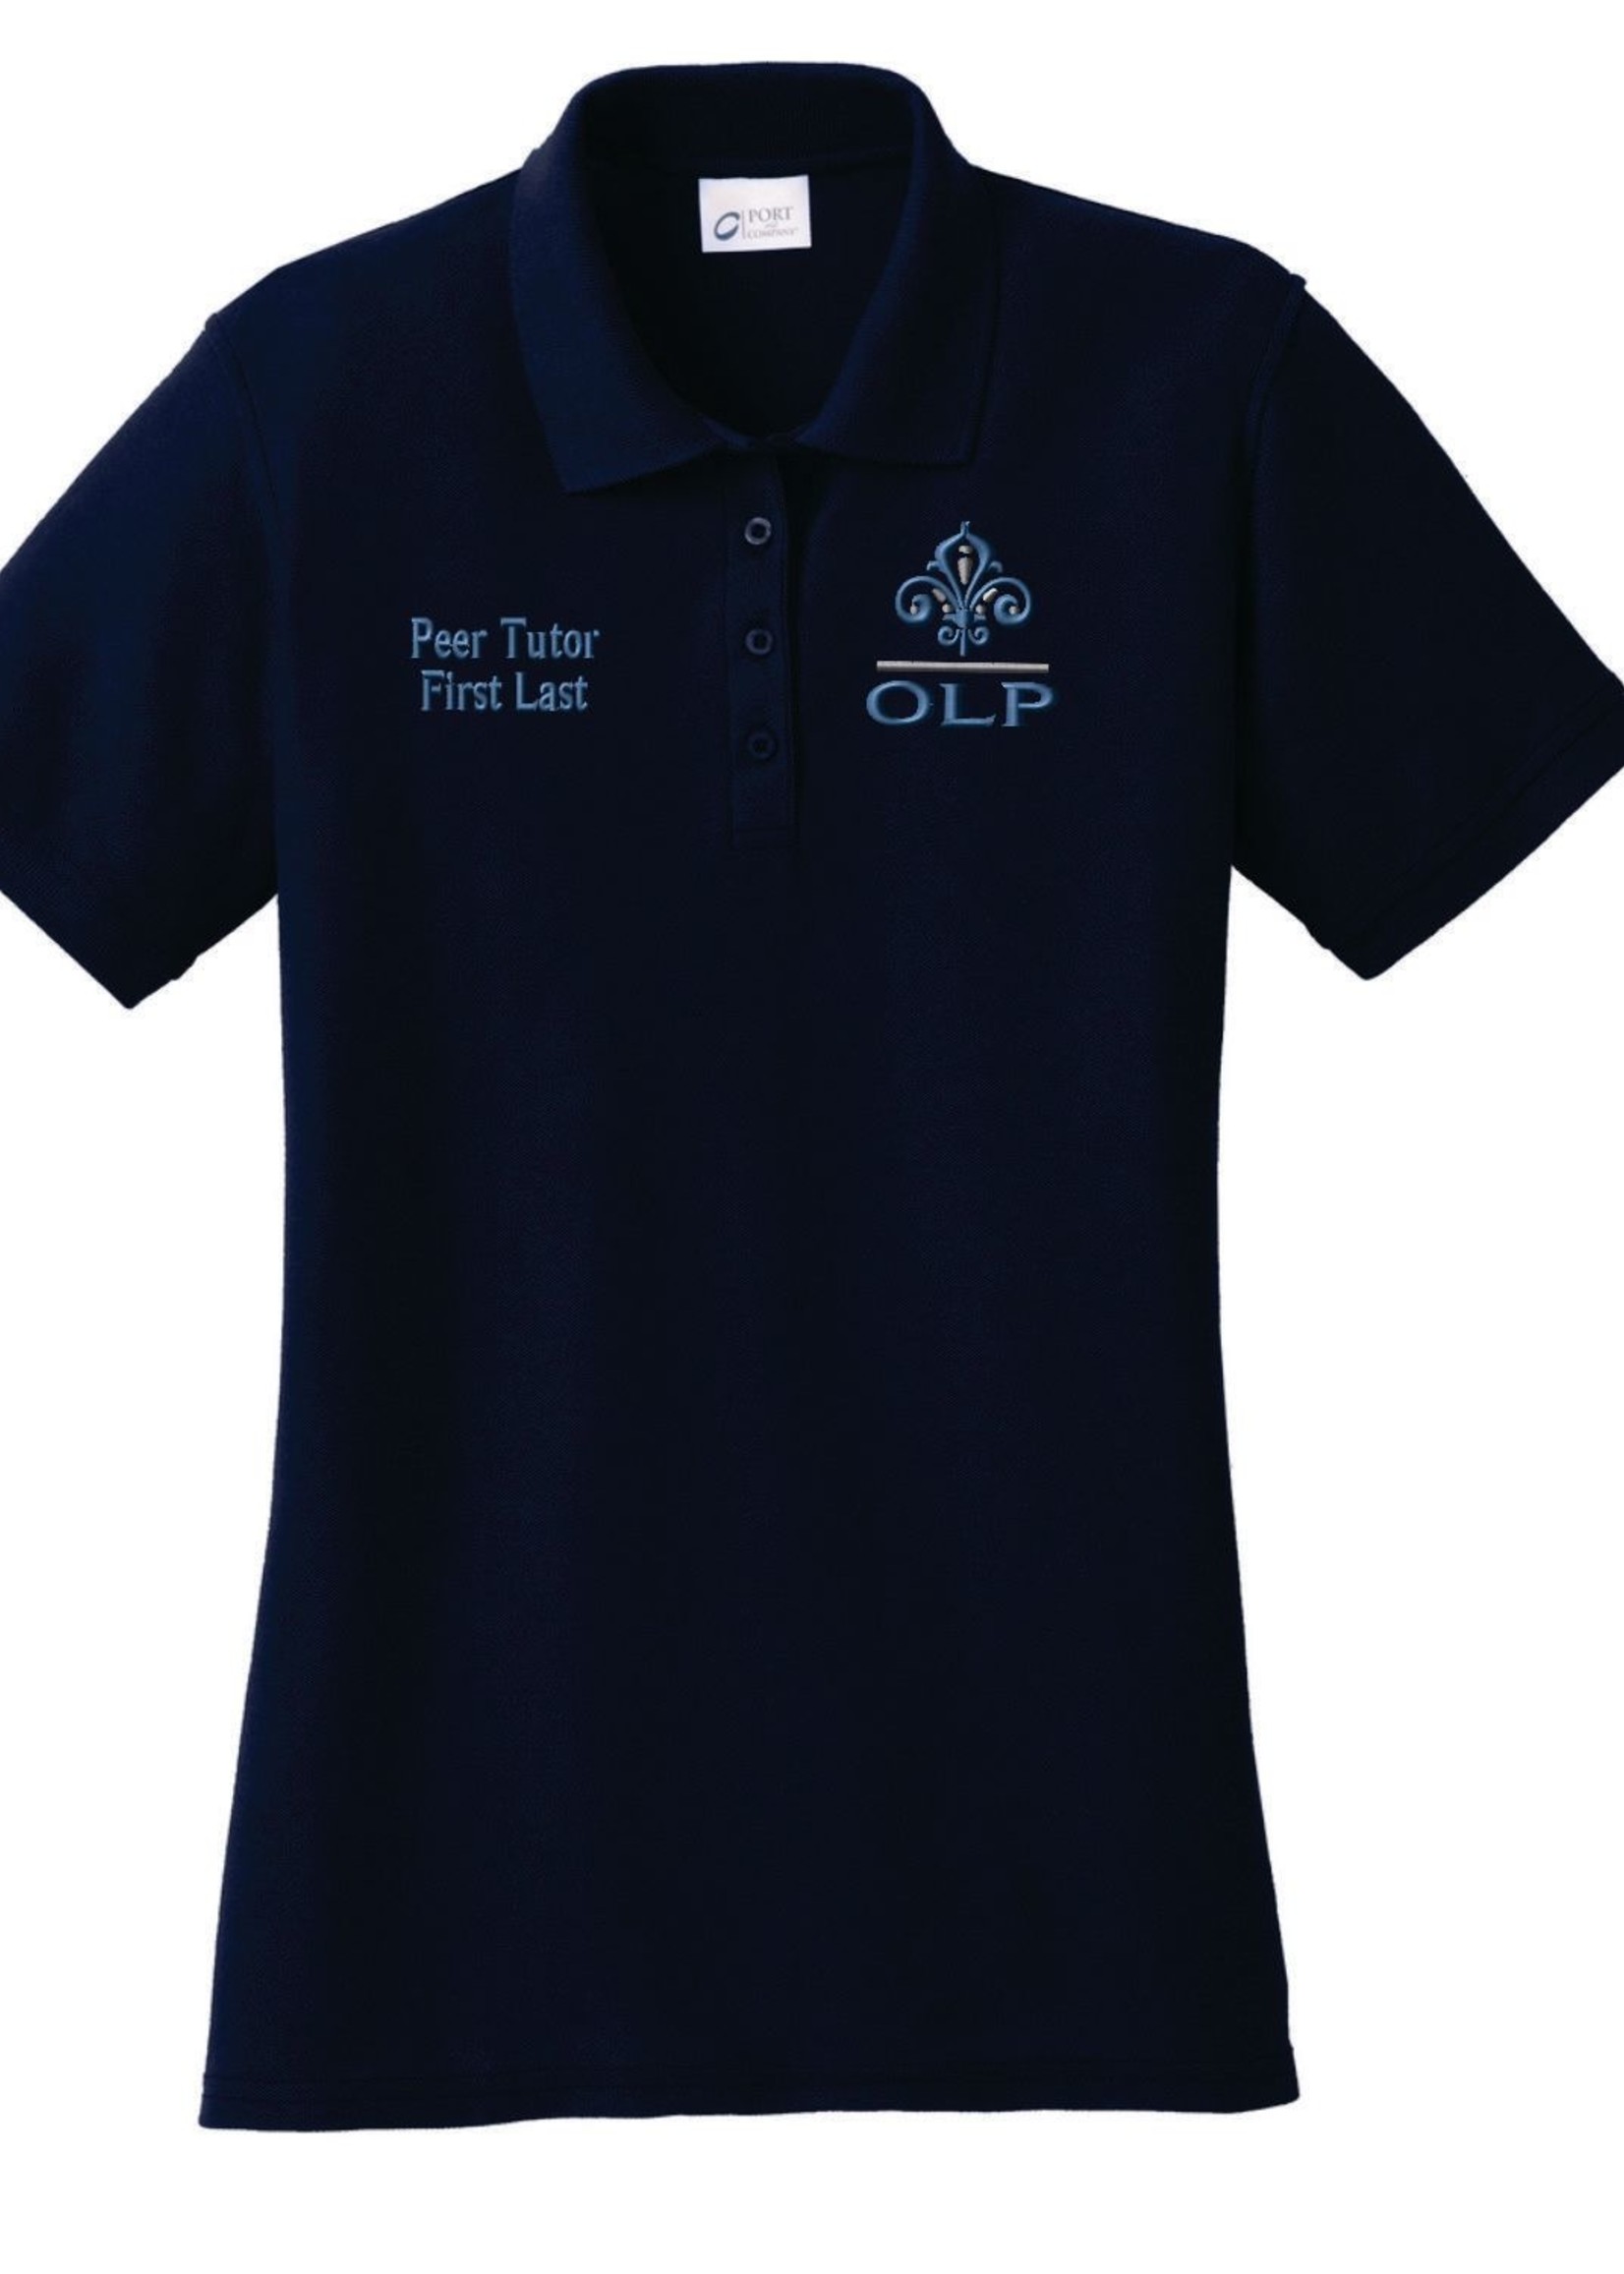 OLP Peer Tutor Ladies Navy Core Pique Polo